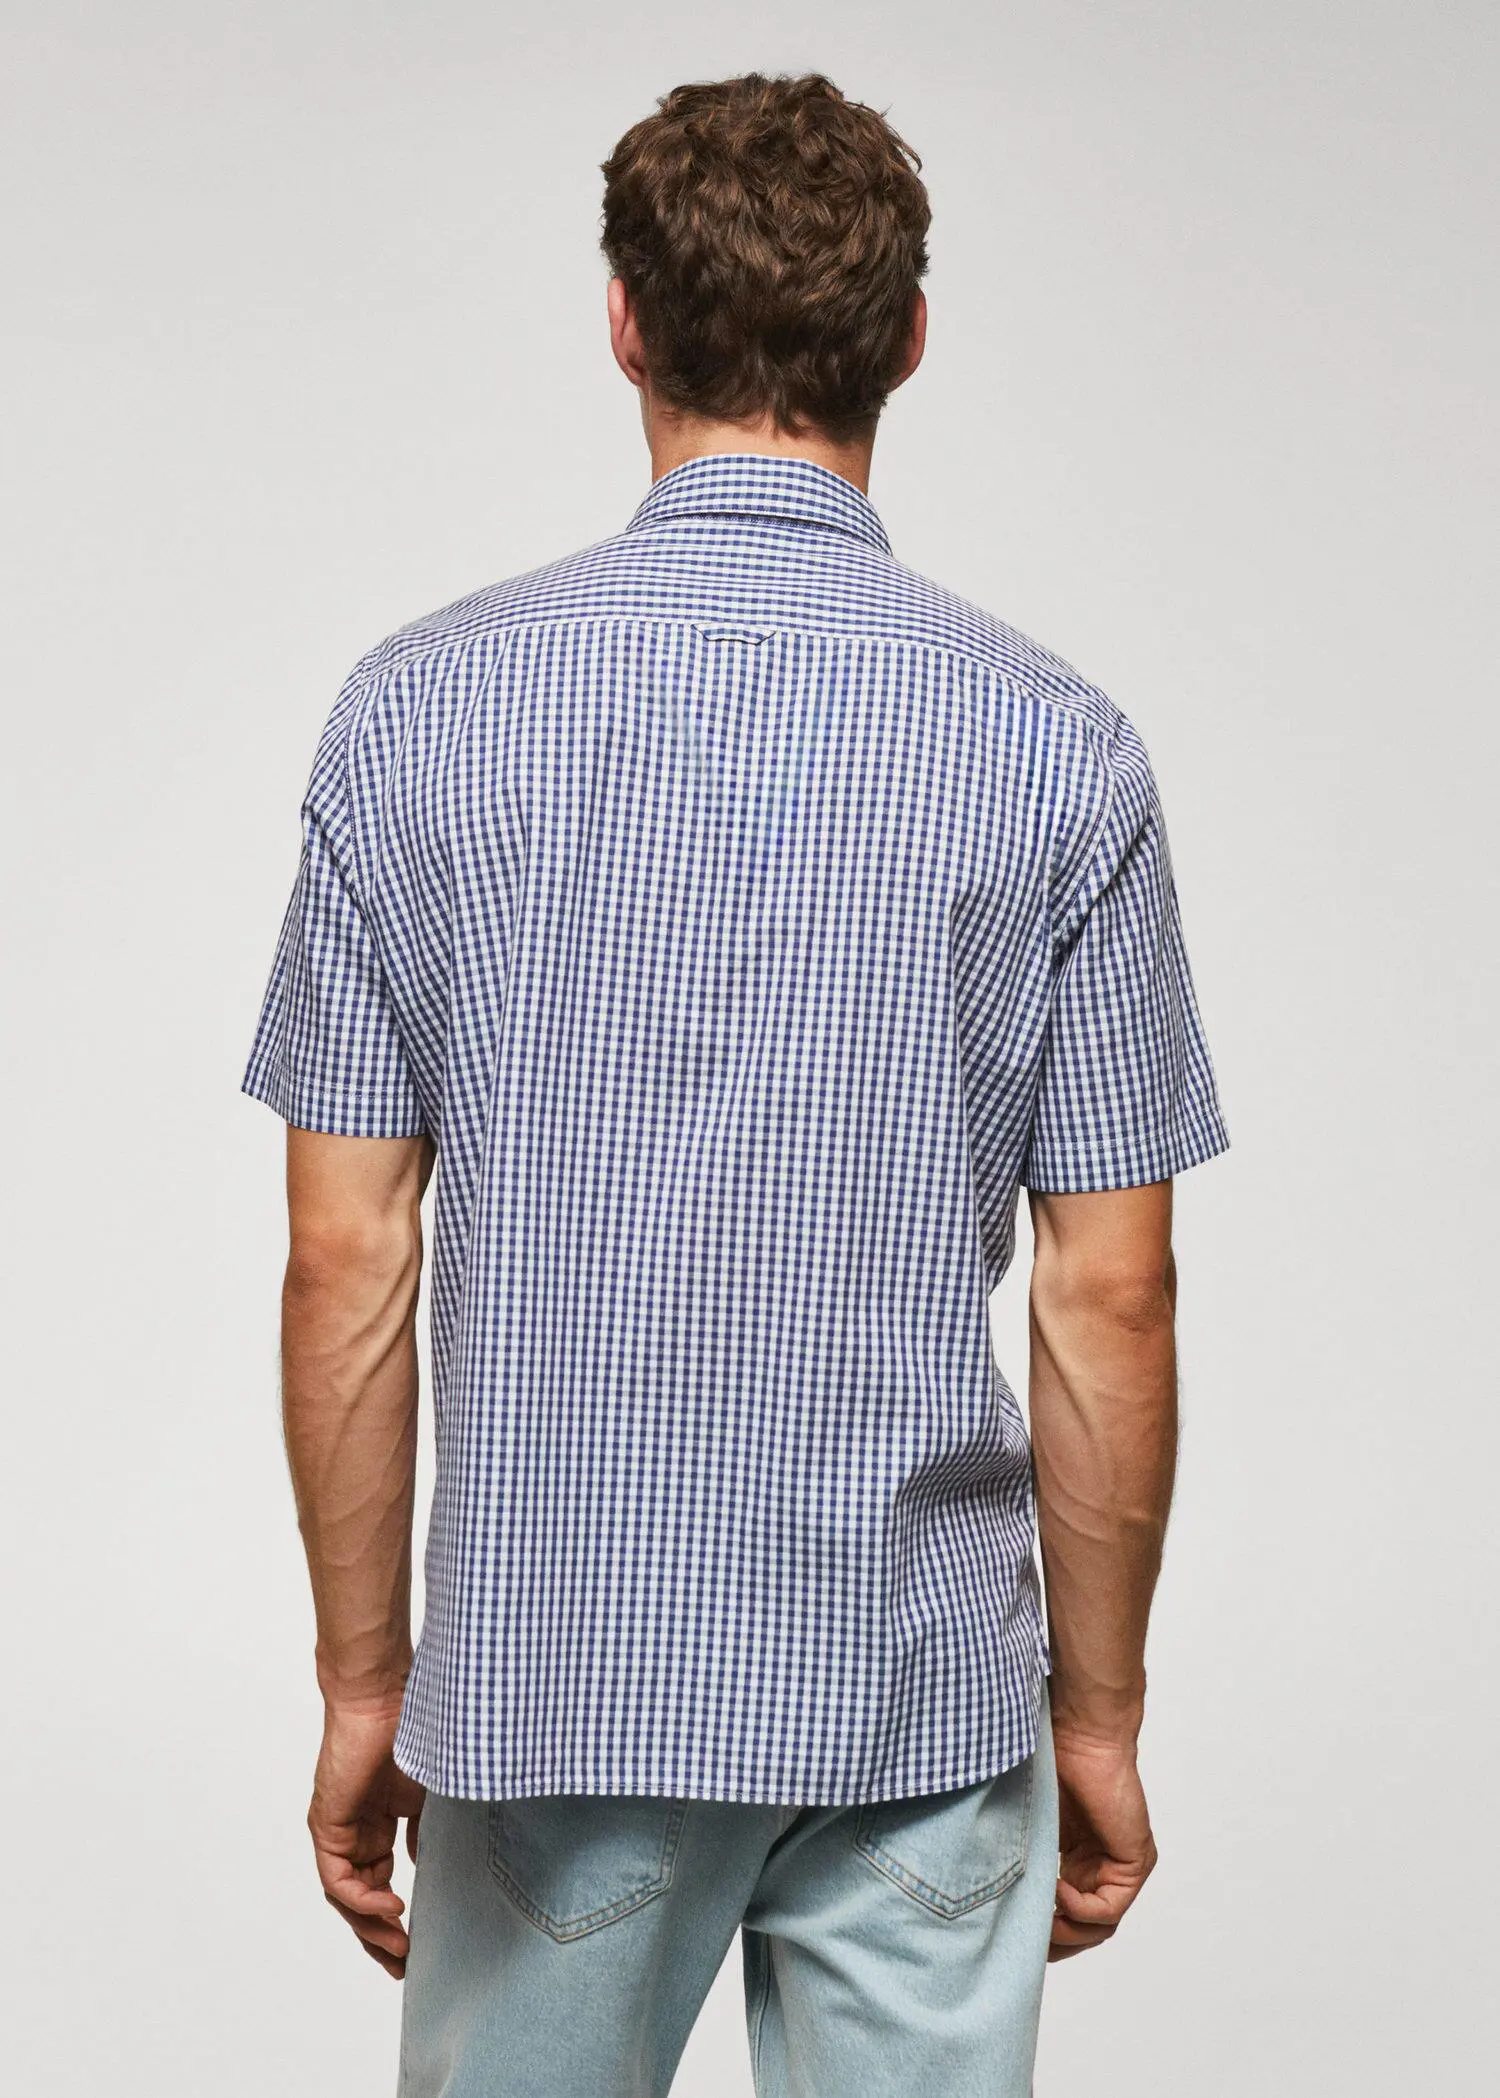 Mango 100% cotton short-sleeved printed shirt. 3